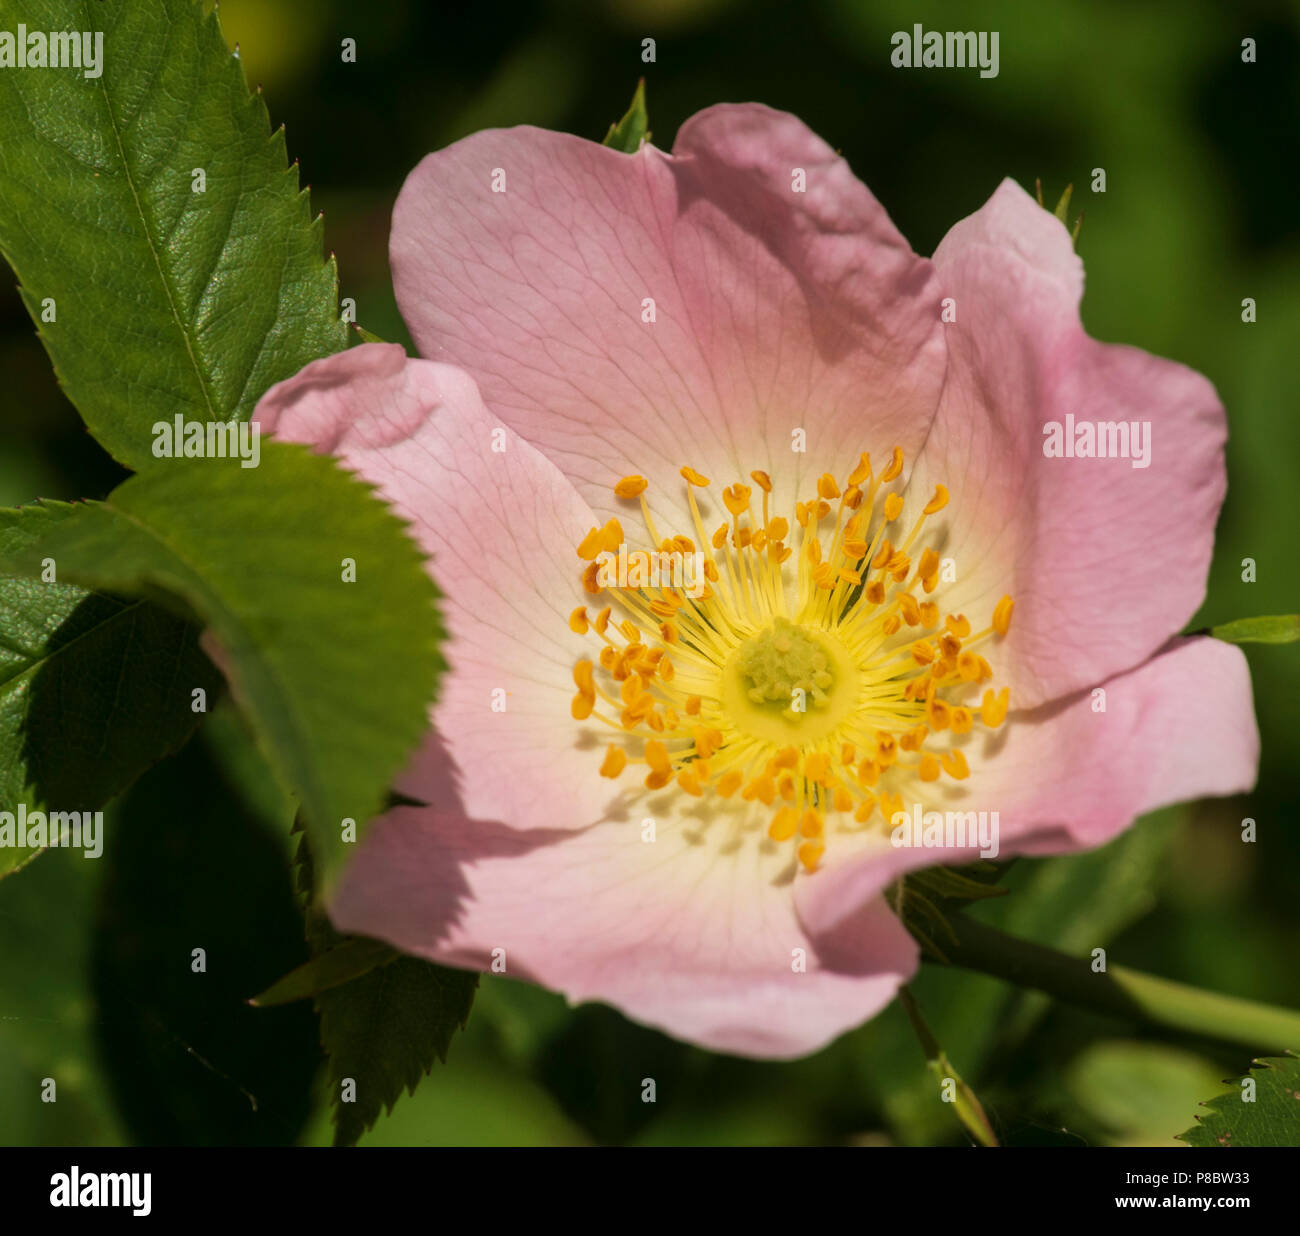 Garden flowers in Southern Scotland in early June - Scottish wild rose, eglantine. Stock Photo